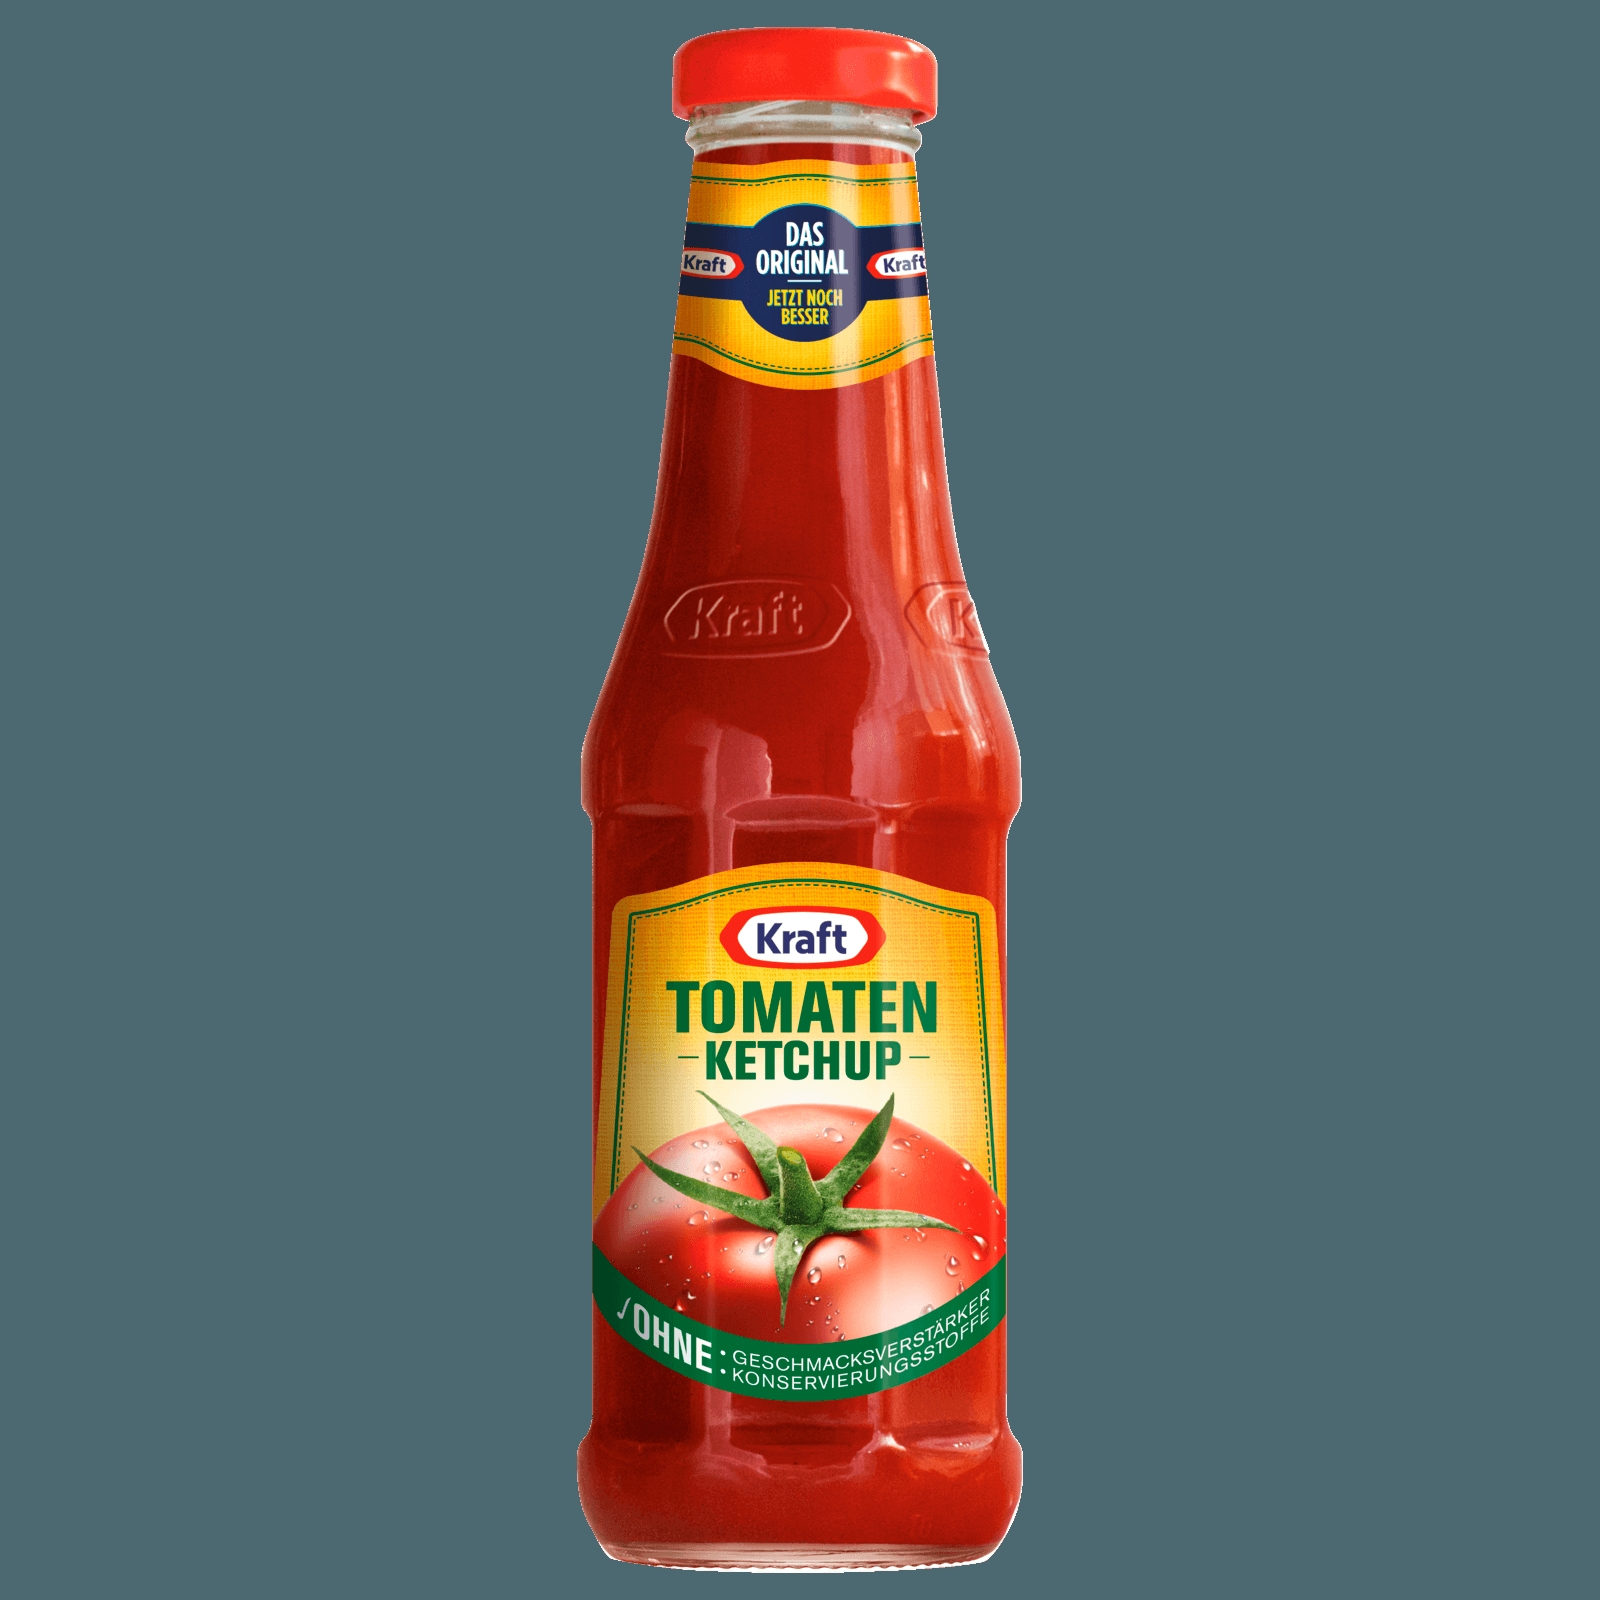 Kraft Tomaten Ketchup 500ml bei REWE online bestellen!